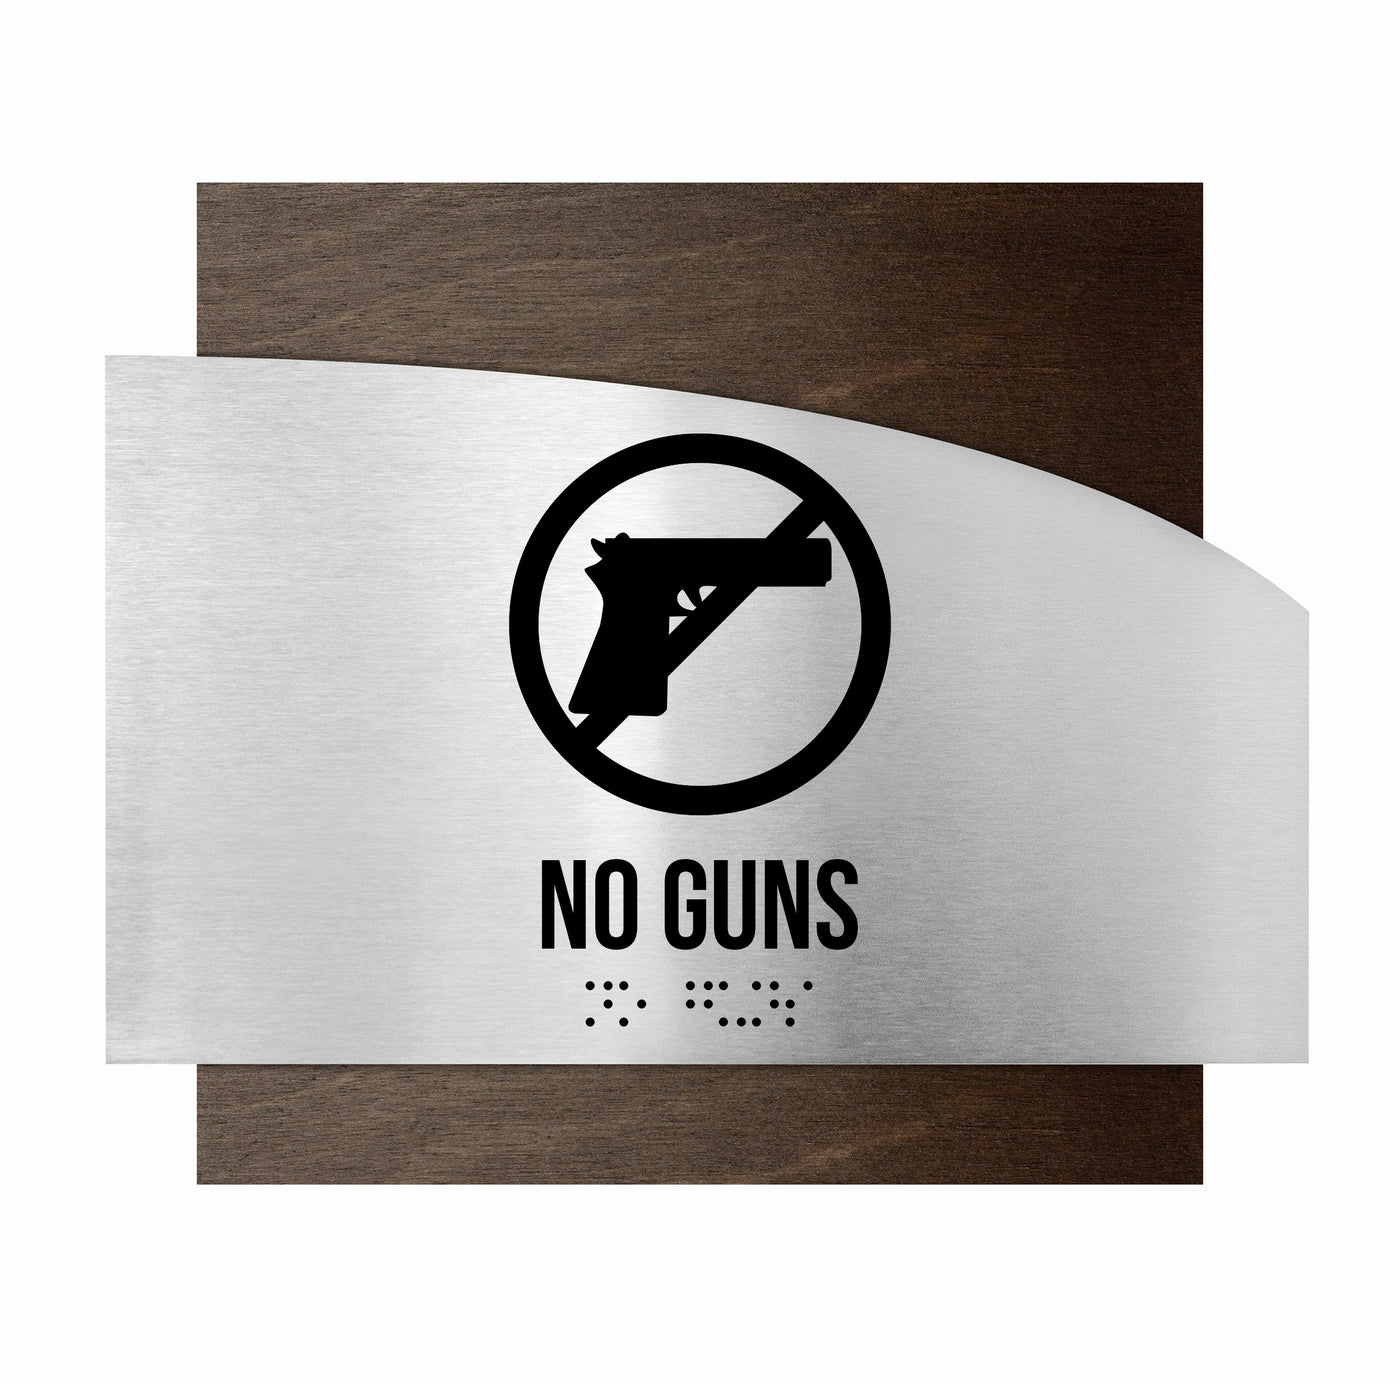 Door Signs - No Guns Sing Wood "Wave" Design